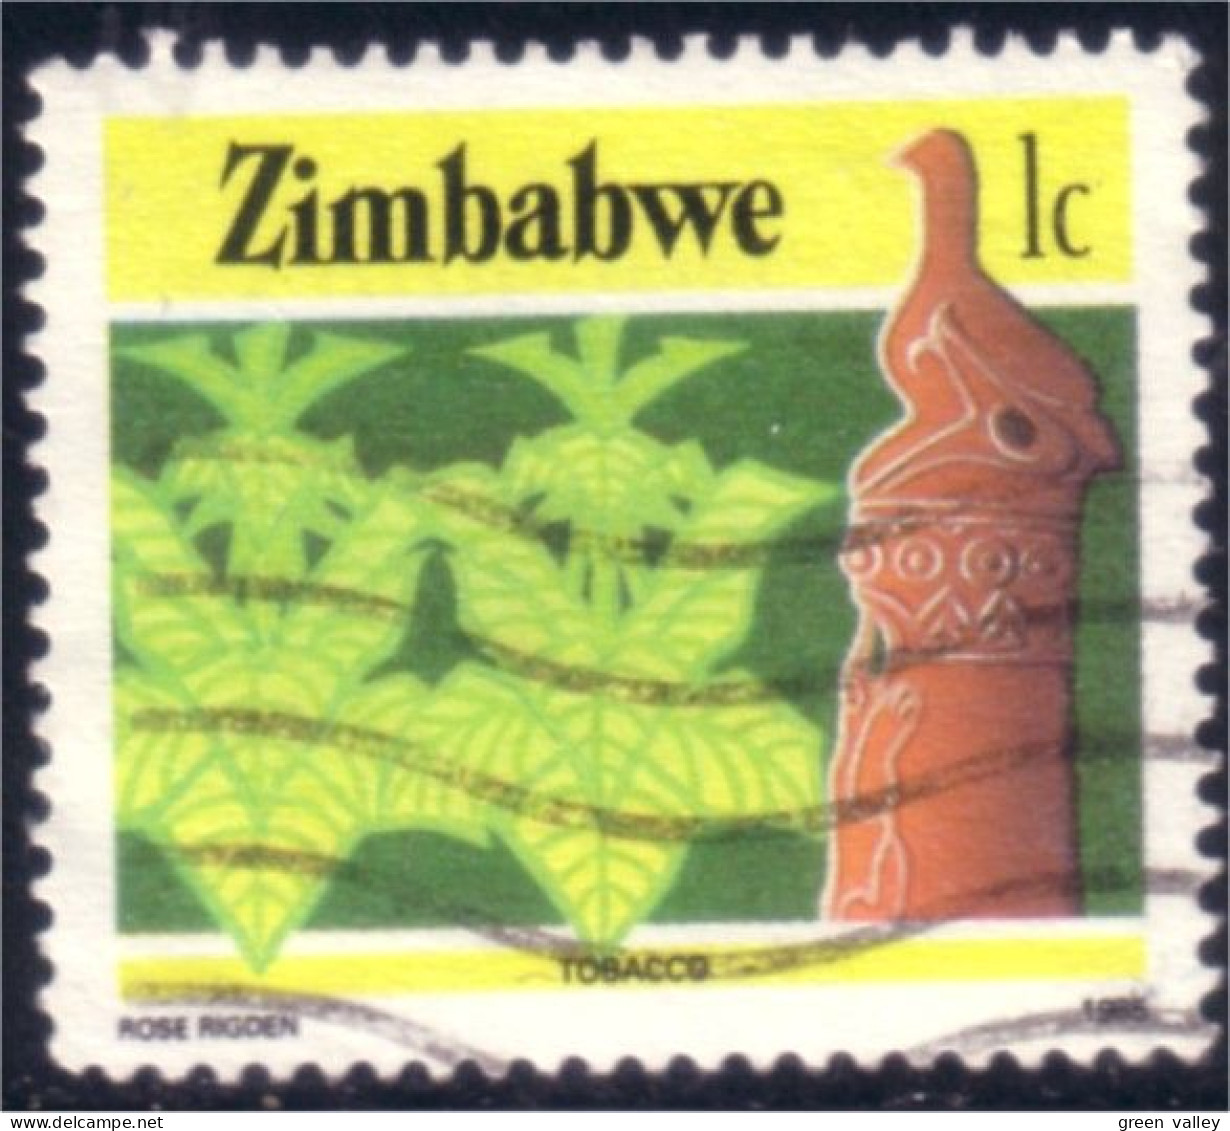 962 Zimbabwe Tabac Tobacco (ZIM-35) - Tobacco